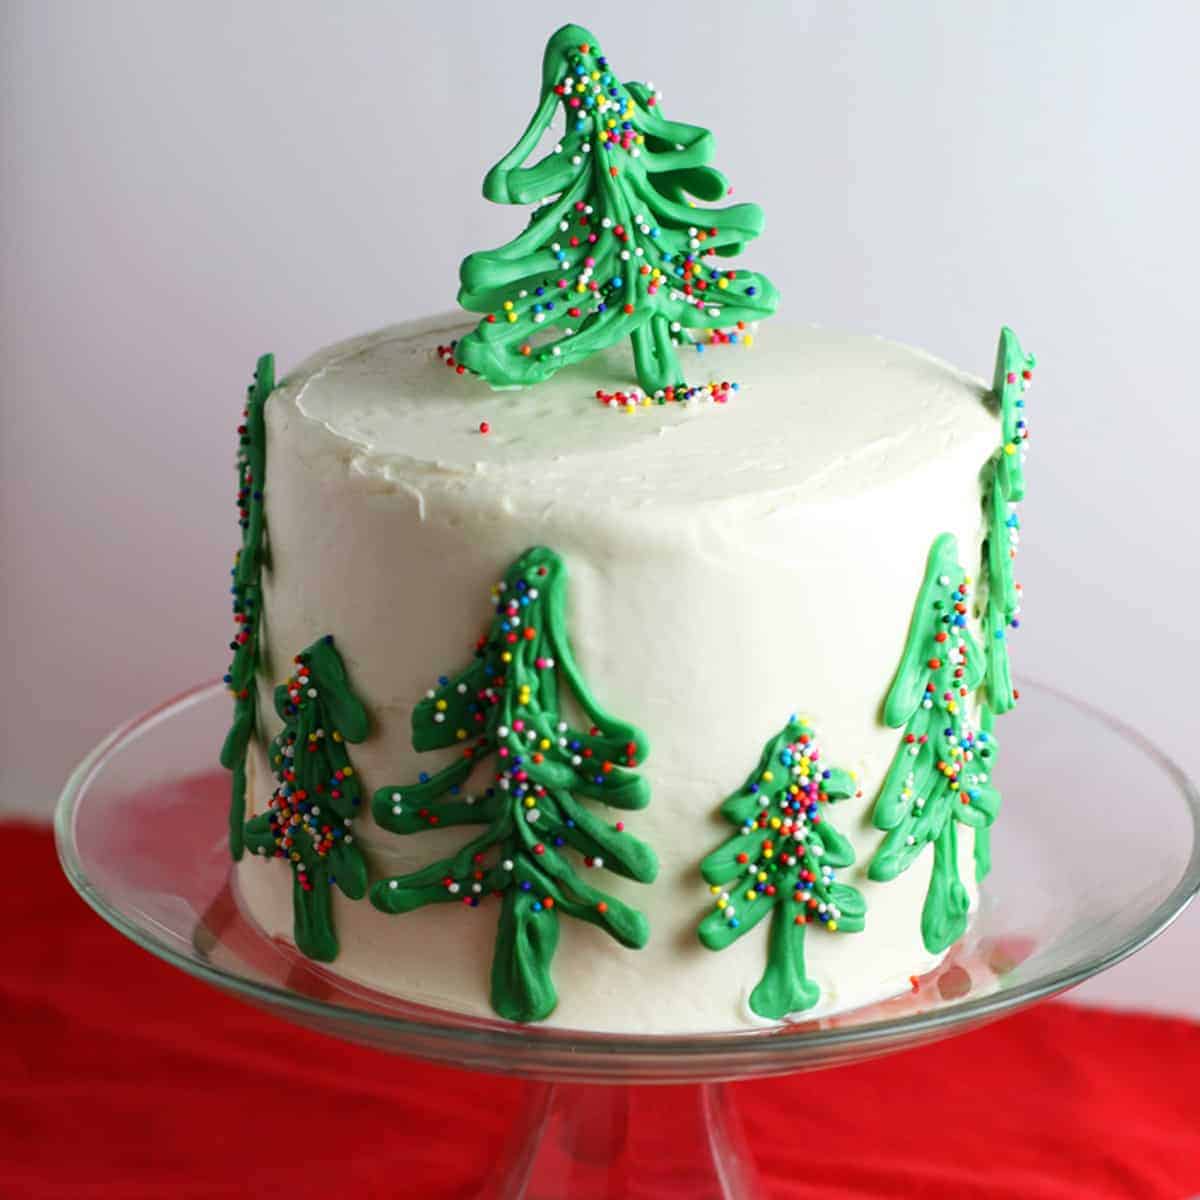 https://www.momlovesbaking.com/wp-content/uploads/2015/12/Chocolate-Christmas-Tree-Cake-SQ.jpg